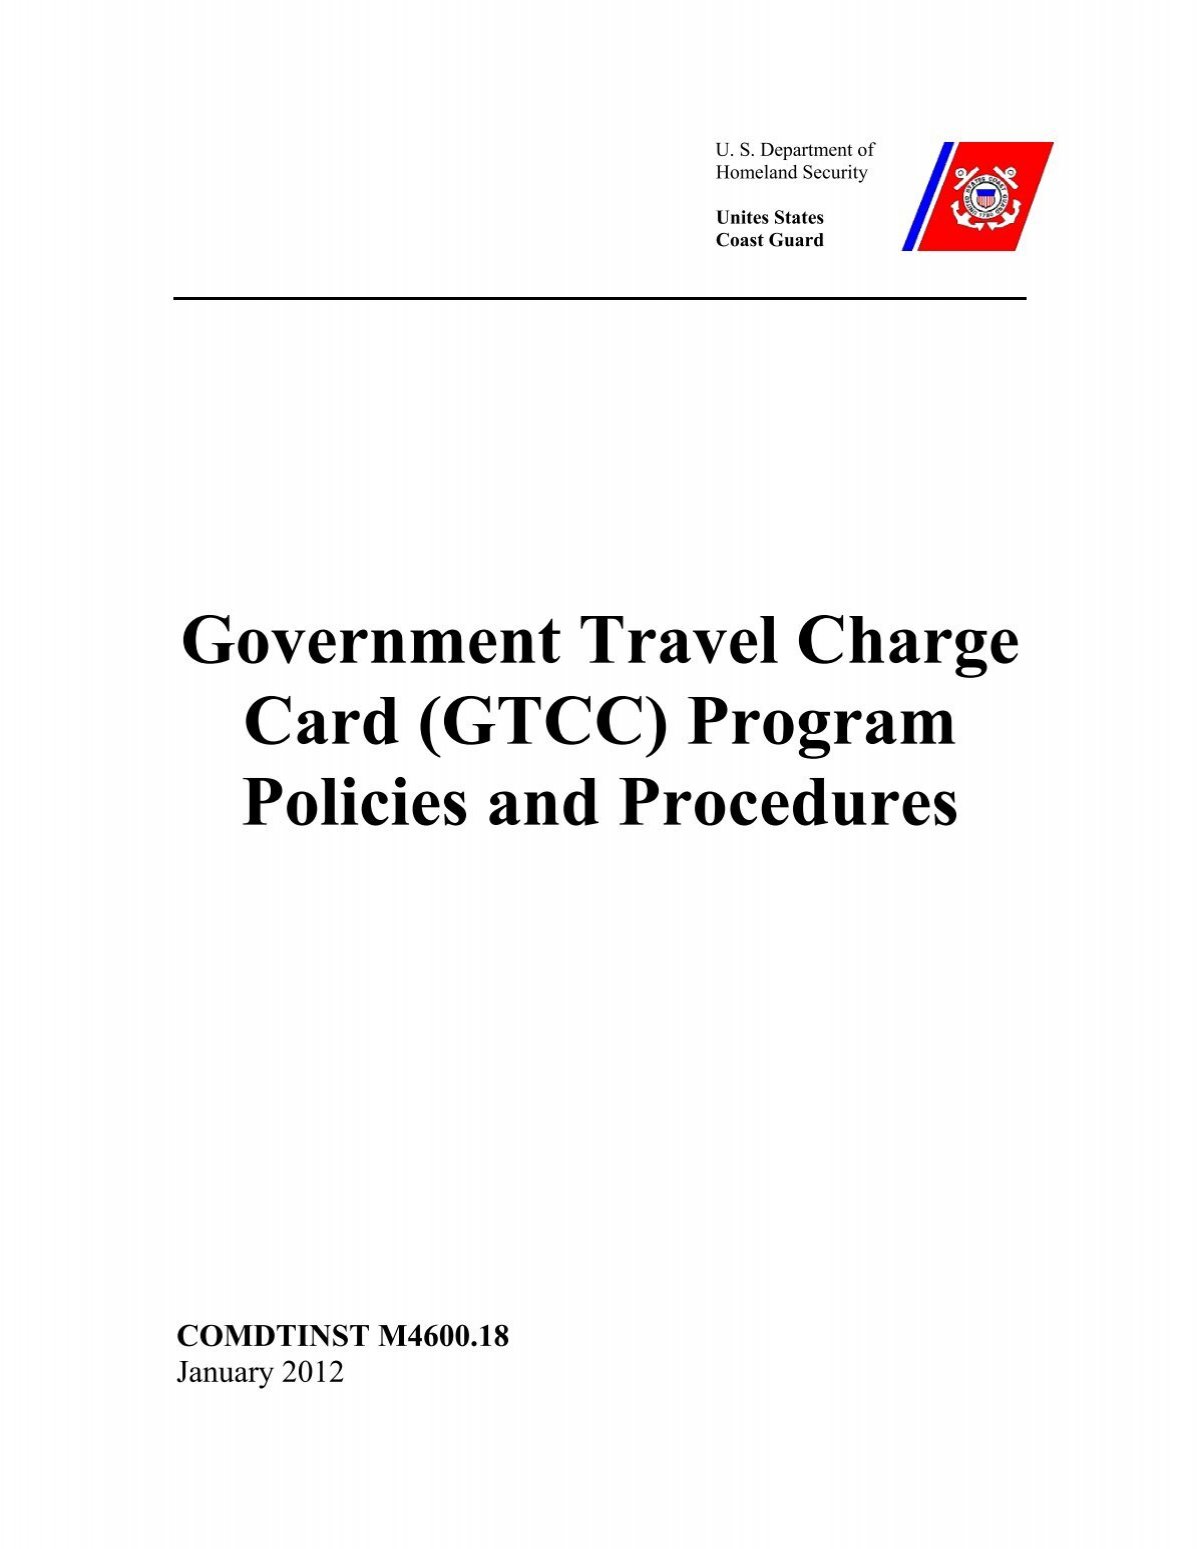 coast guard government travel card